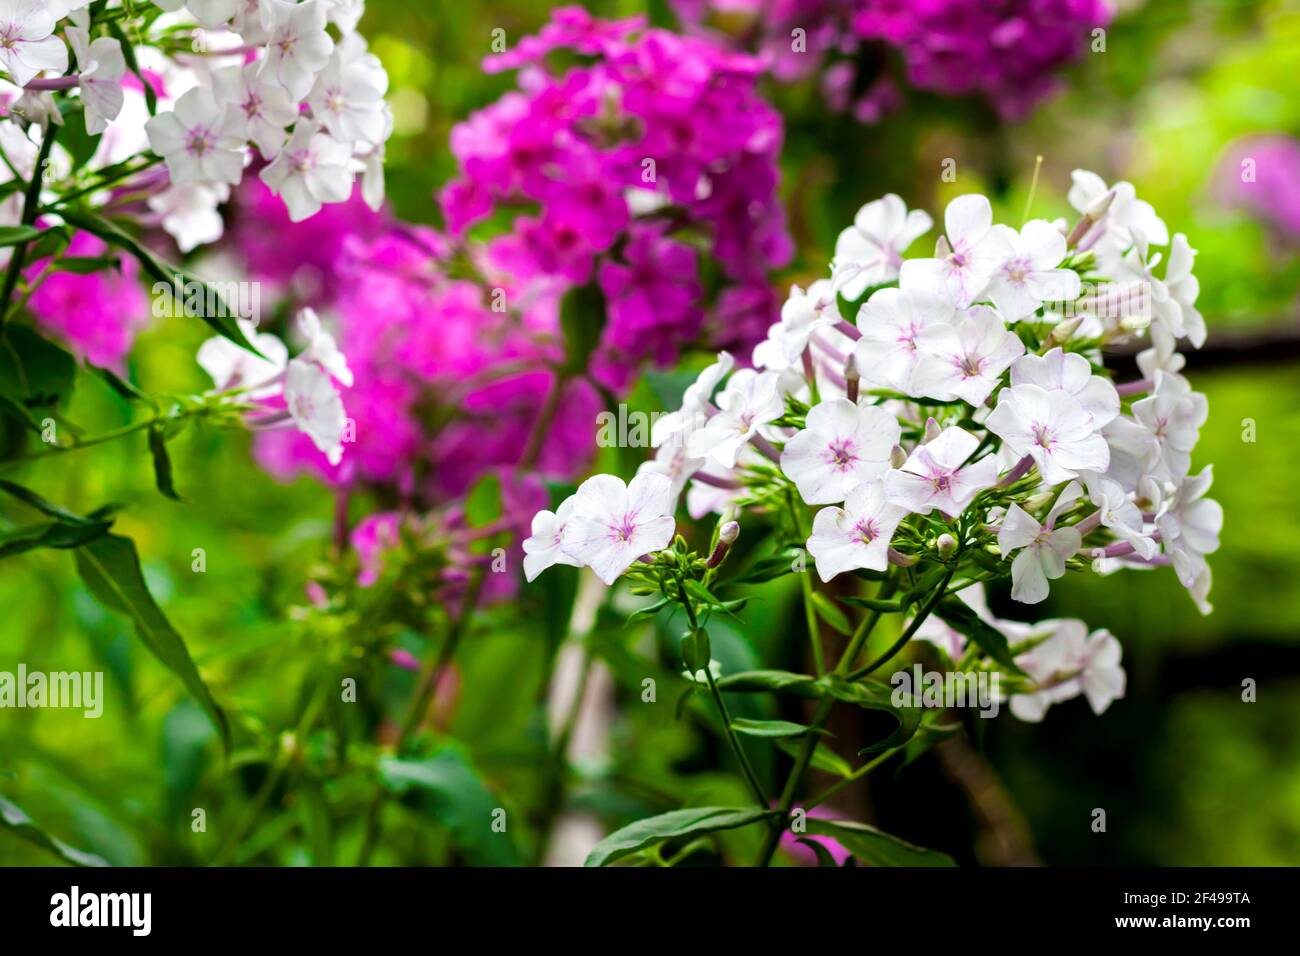 White and purple garden Phlox closeup on green foliage background Stock Photo